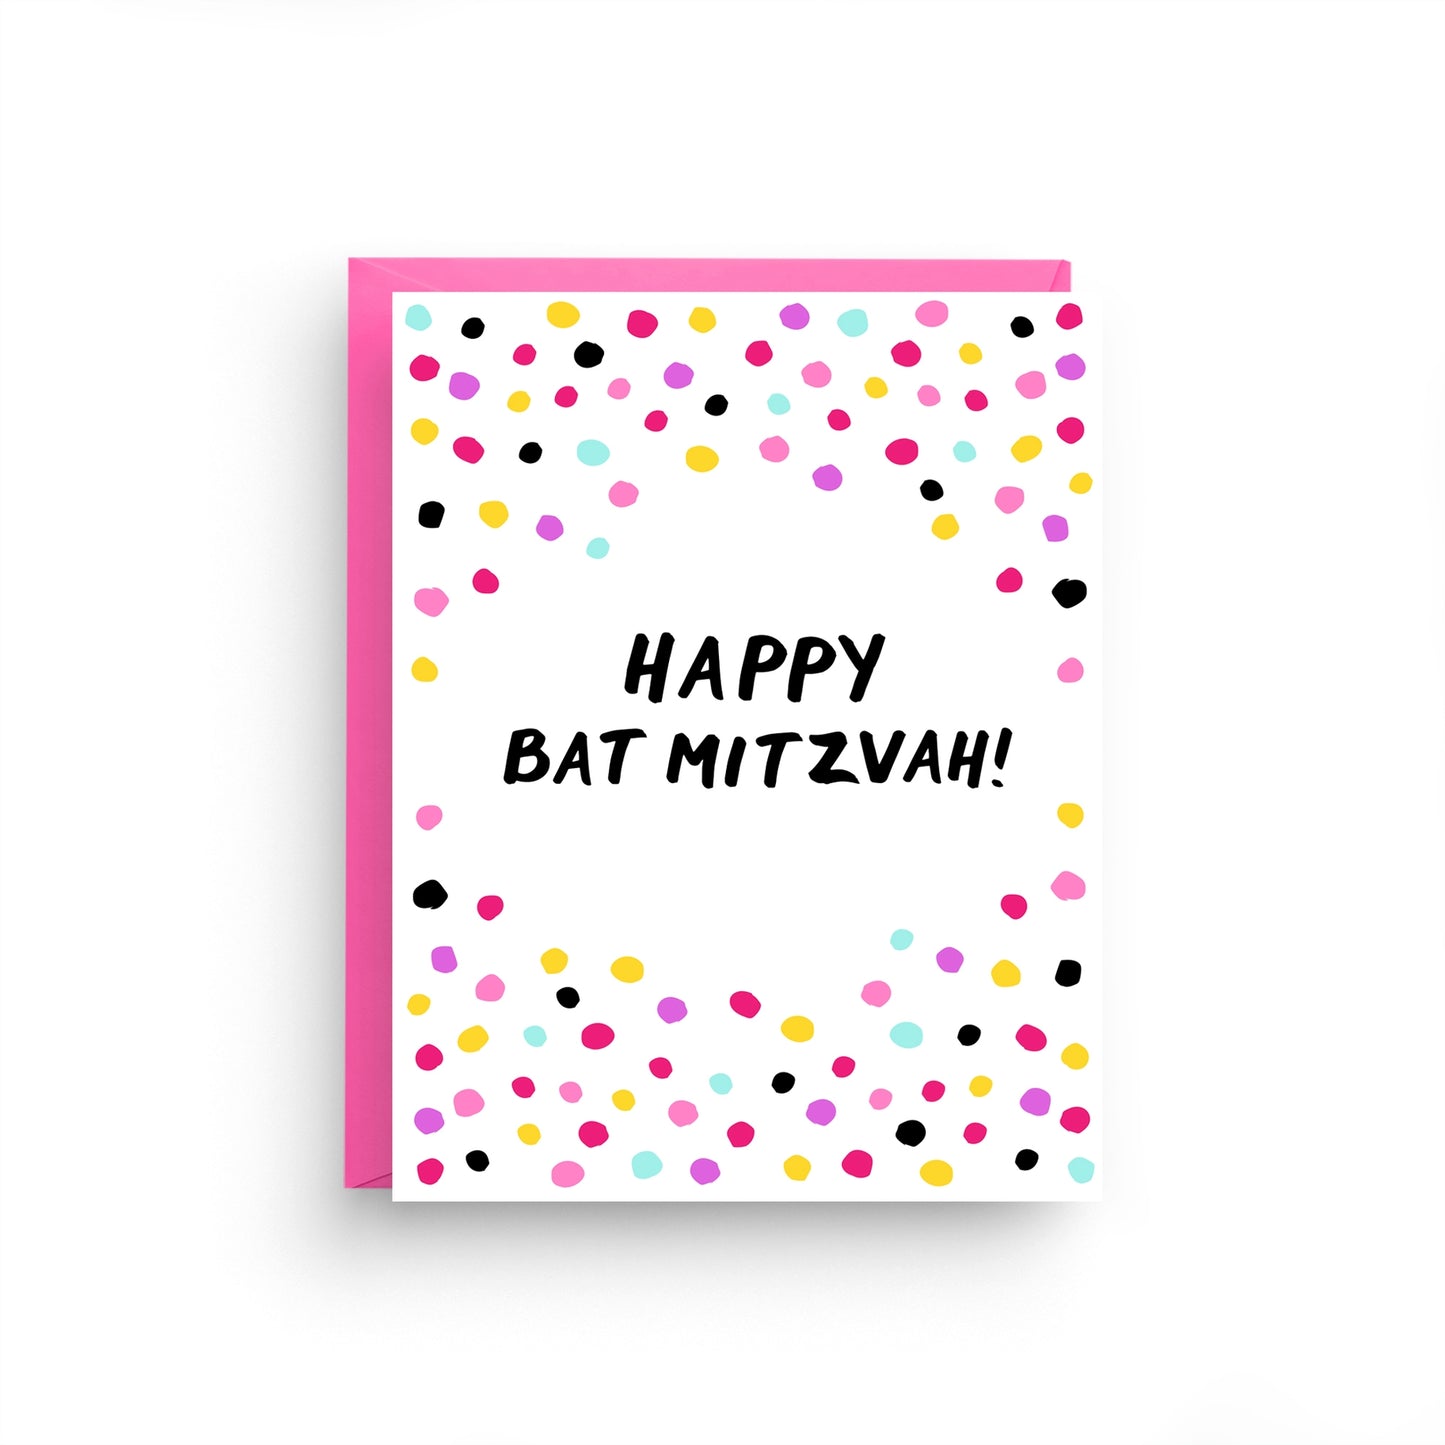 Happy Bat Mitzvah! - Greeting Card - Mellow Monkey